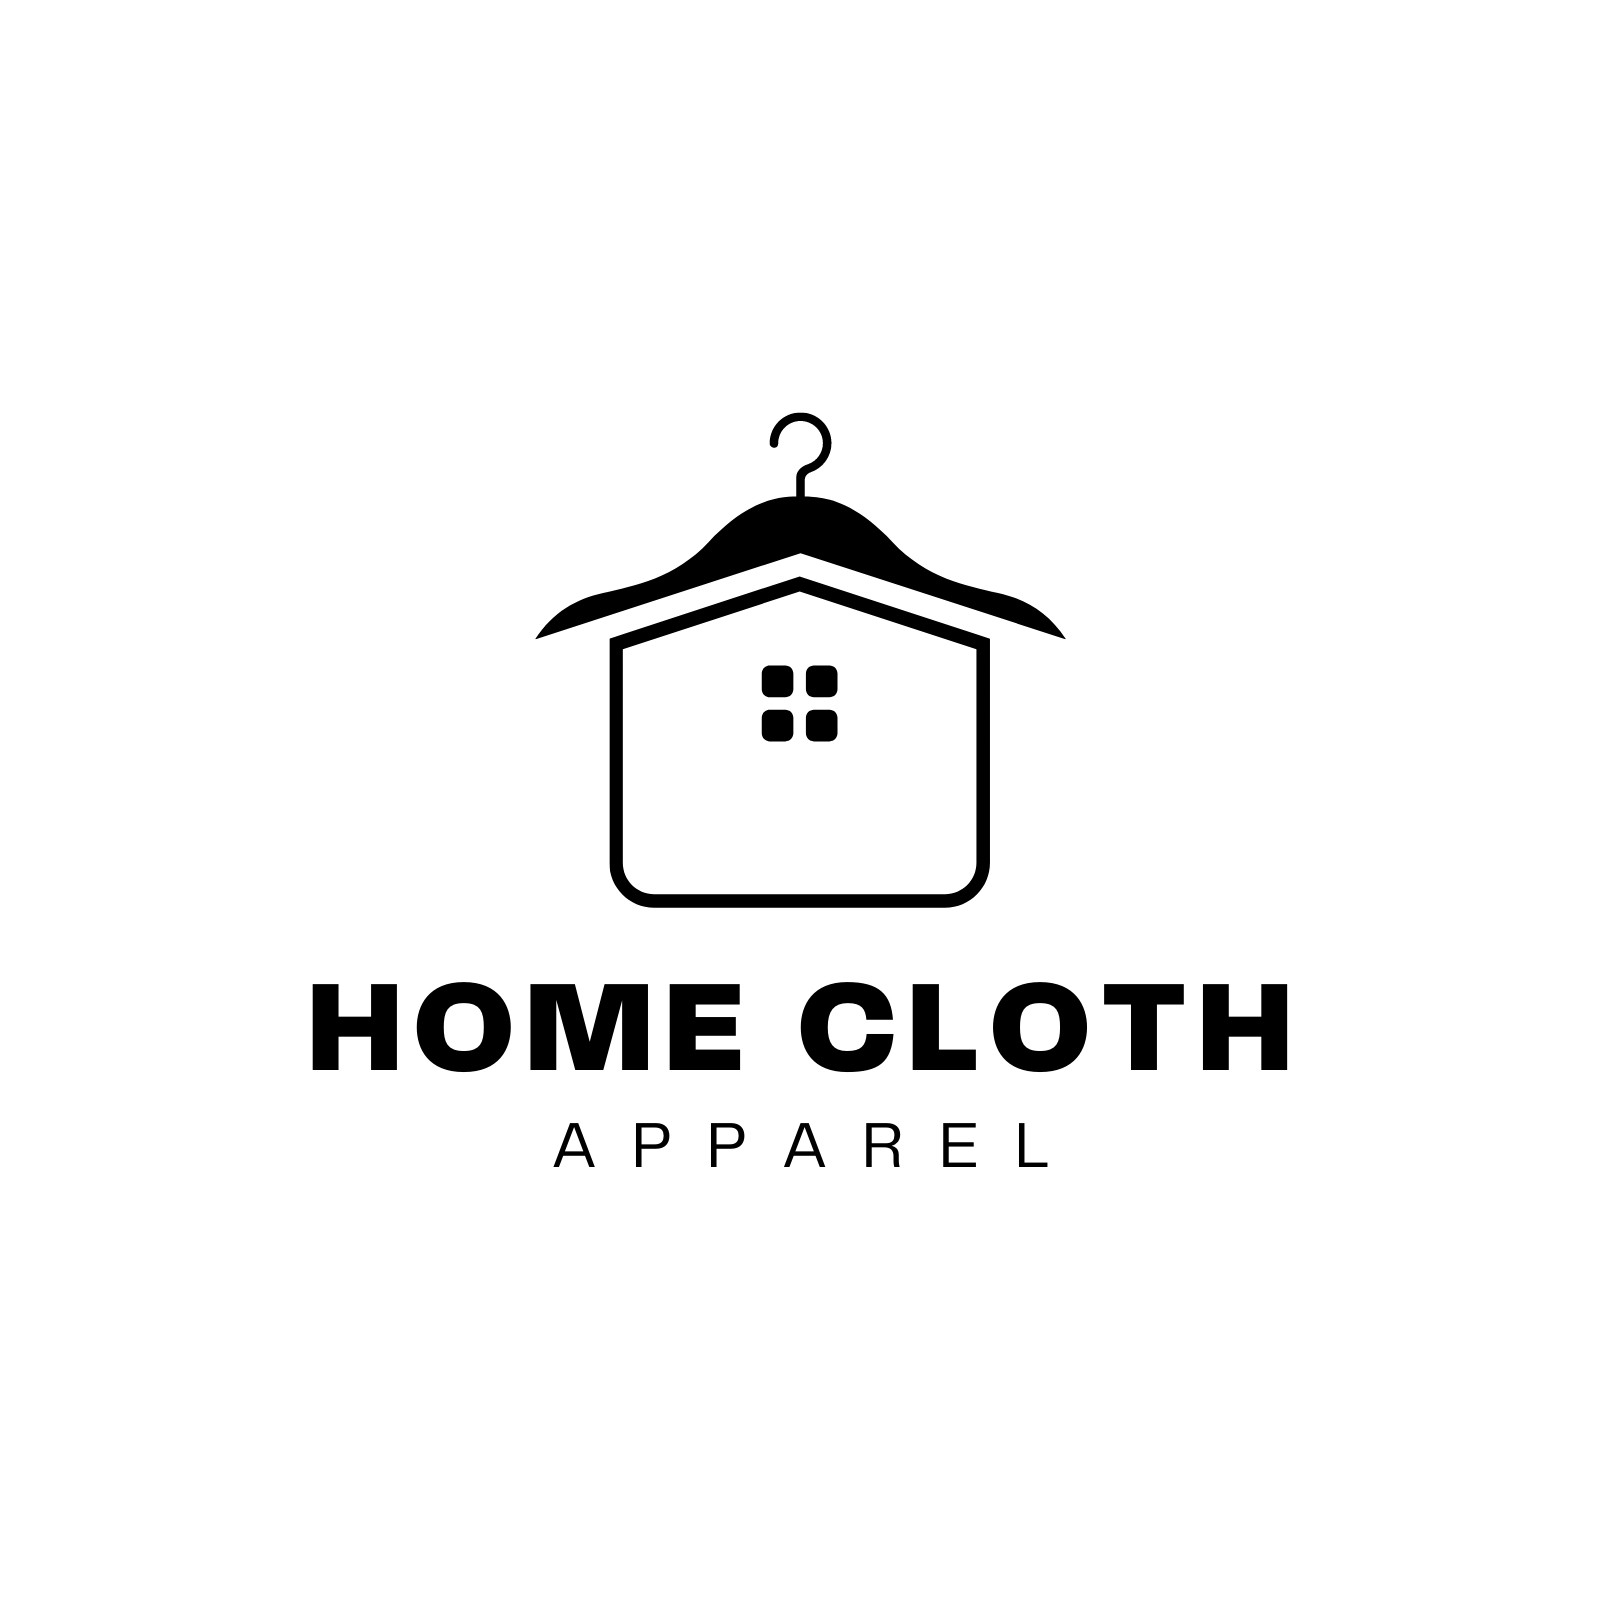 Customize 1,814+ Clothing Logo Templates Online - Canva